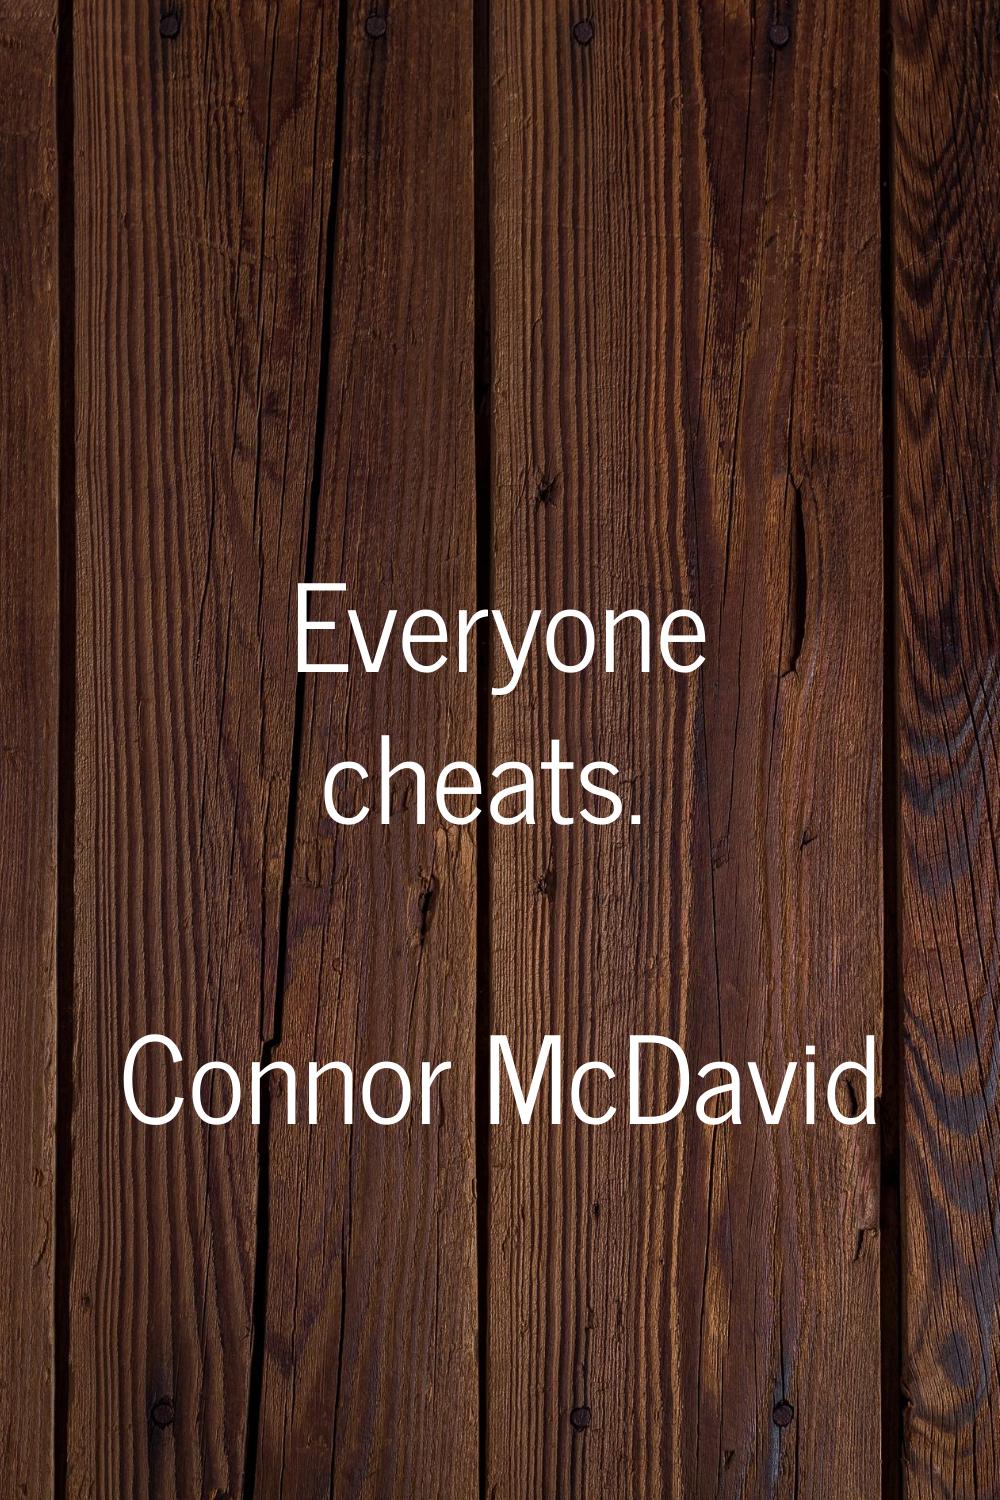 Everyone cheats.